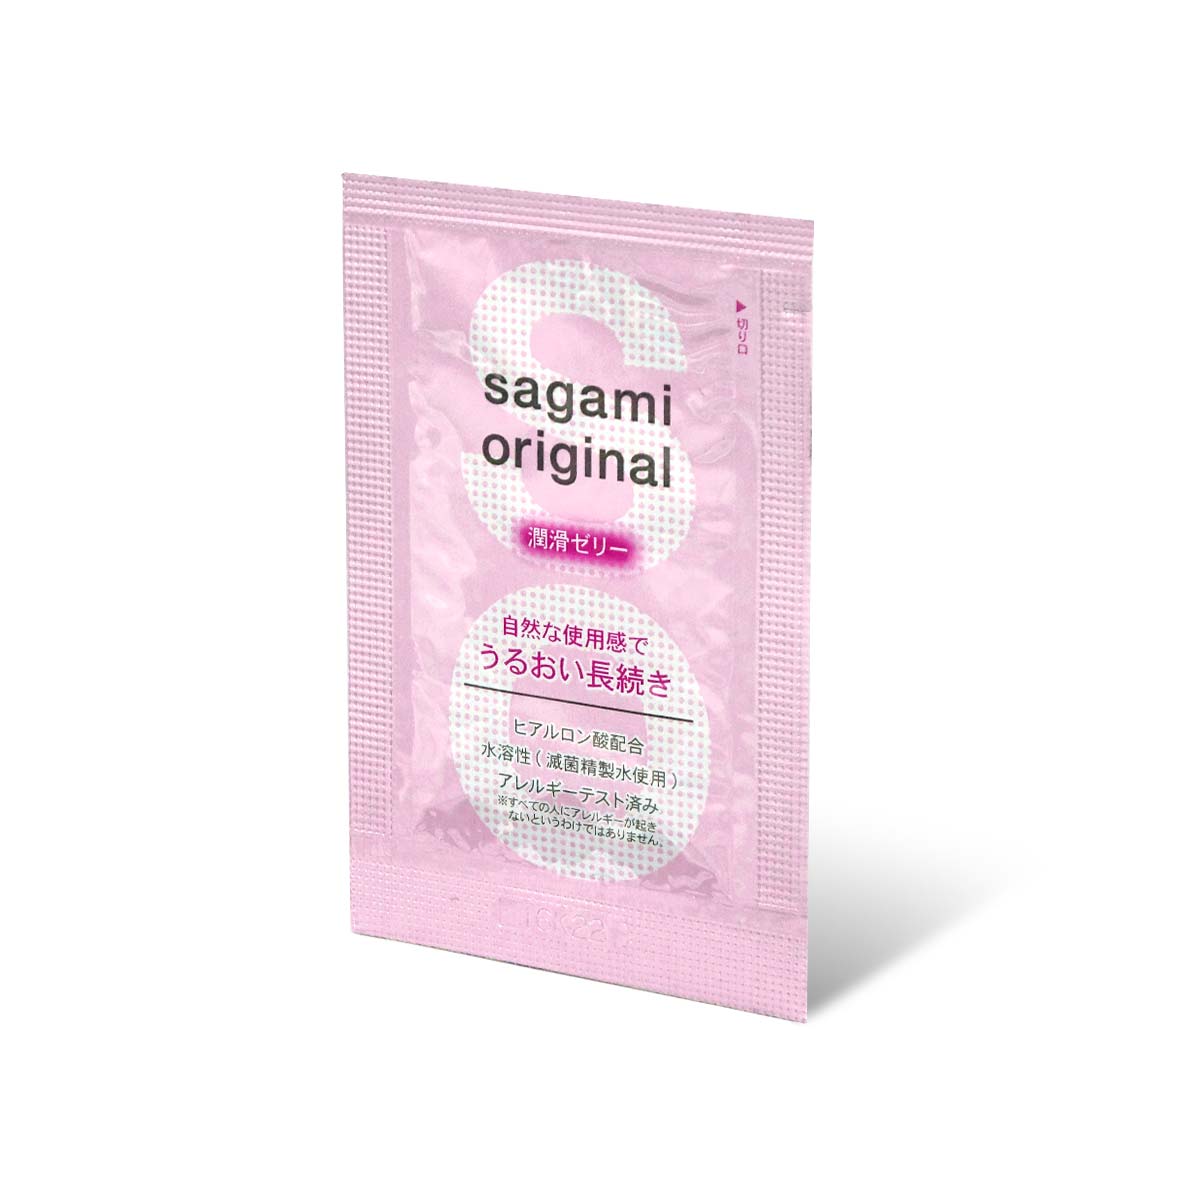 Sagami Original Lubricating Gel 3g (sachet) 1 piece Water-based Lubricant-p_1